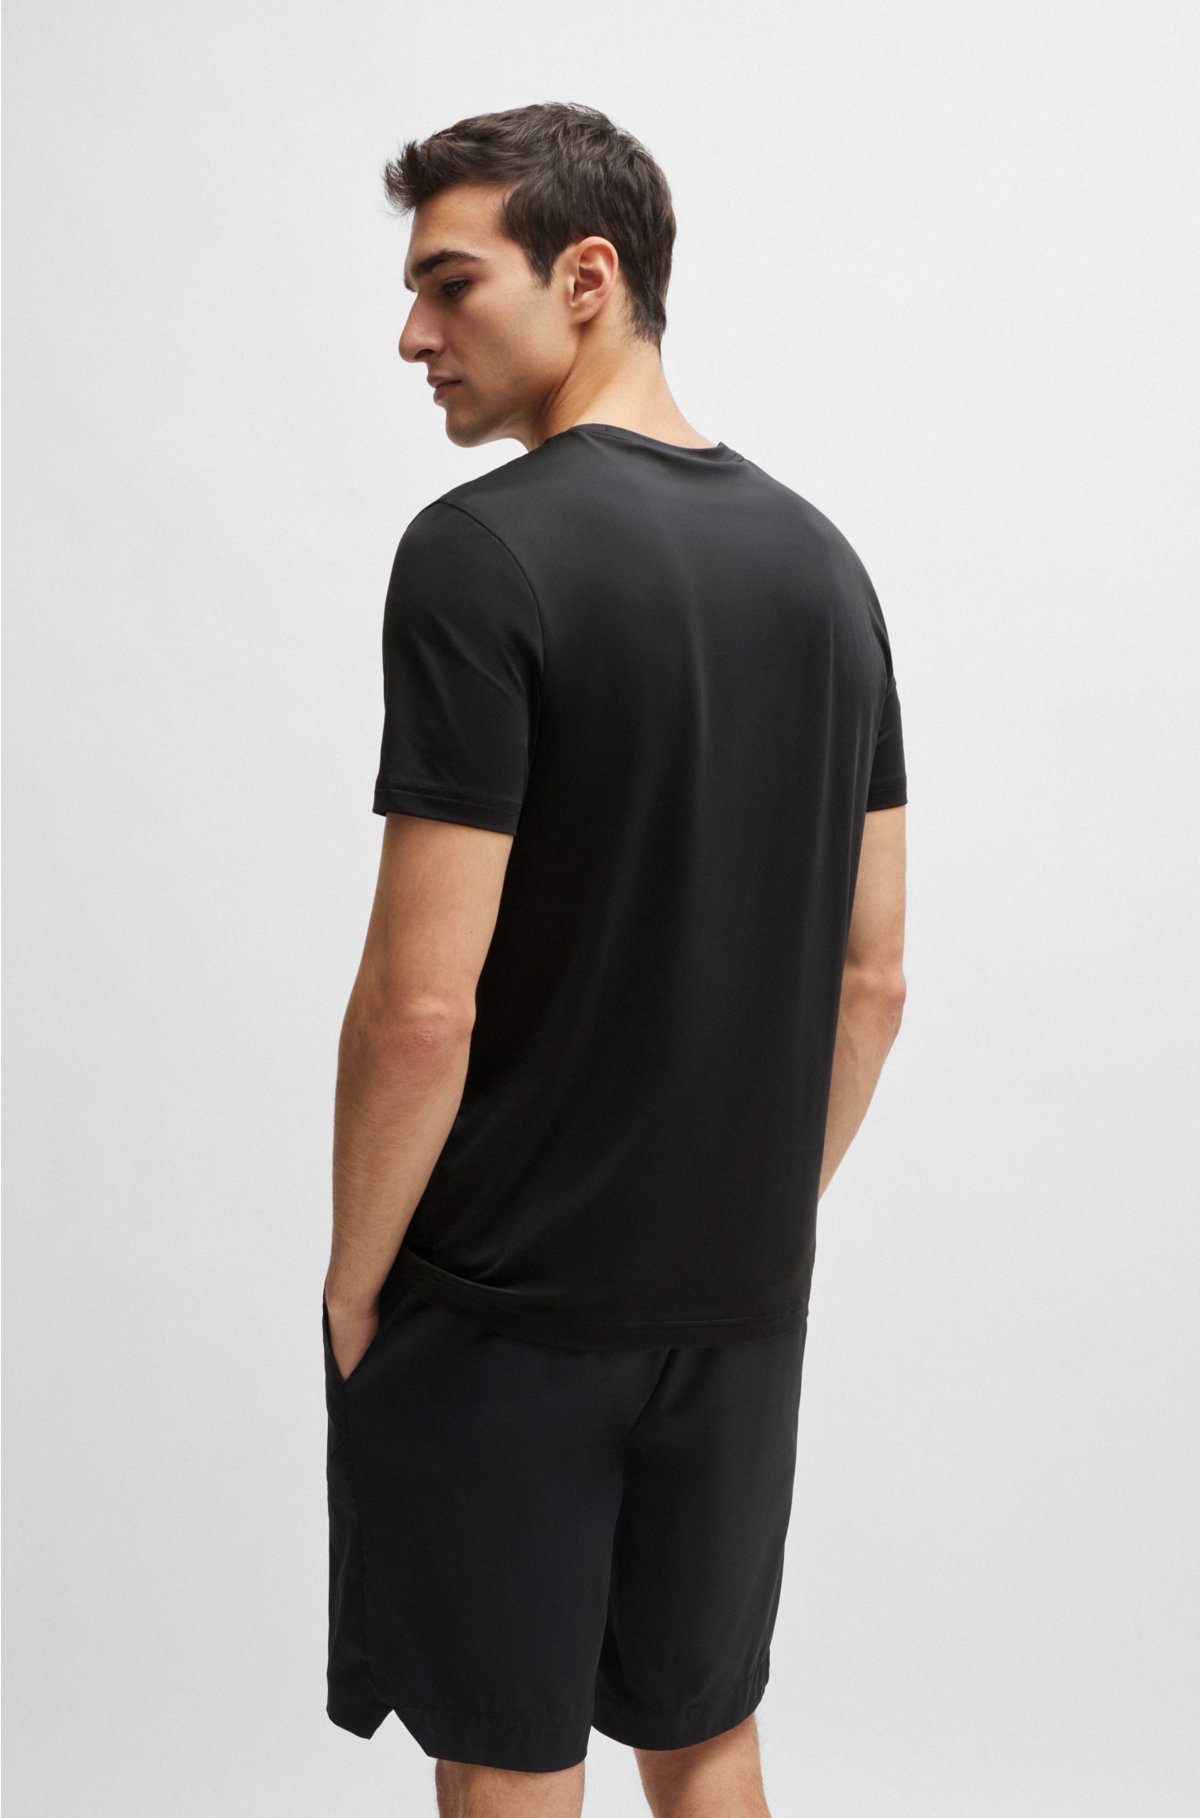 Performance-stretch T-shirt with decorative reflective logo, Black